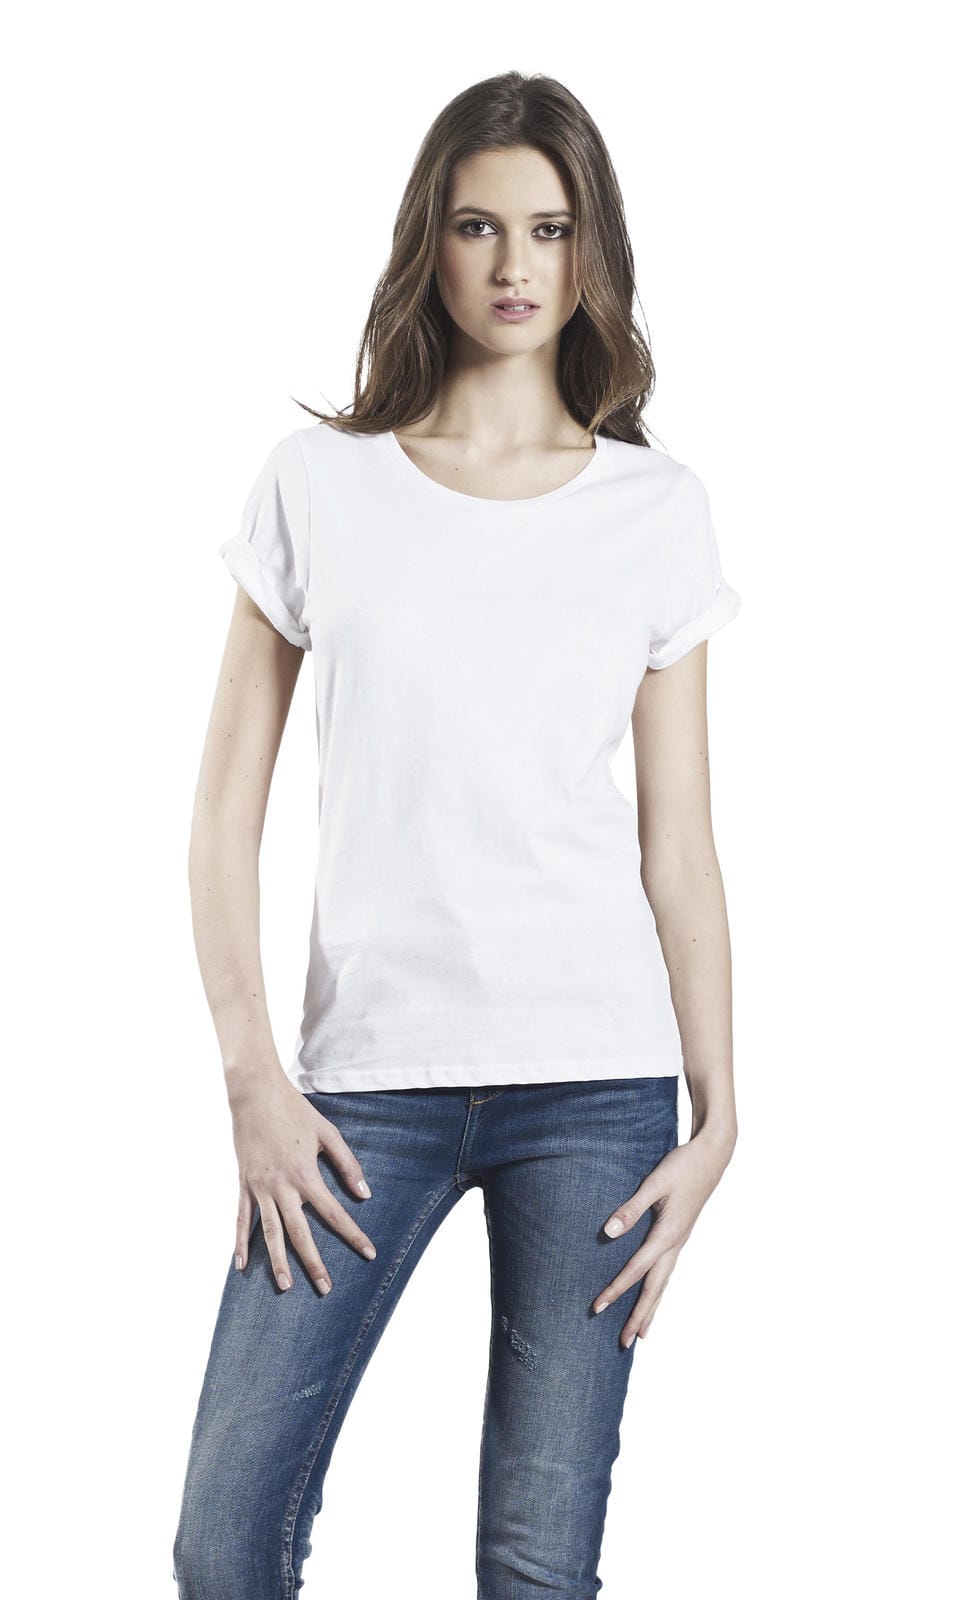 £25 - Organic Women's Rolled Sleeve T-Shirt - YogaWellbeing.co.uk